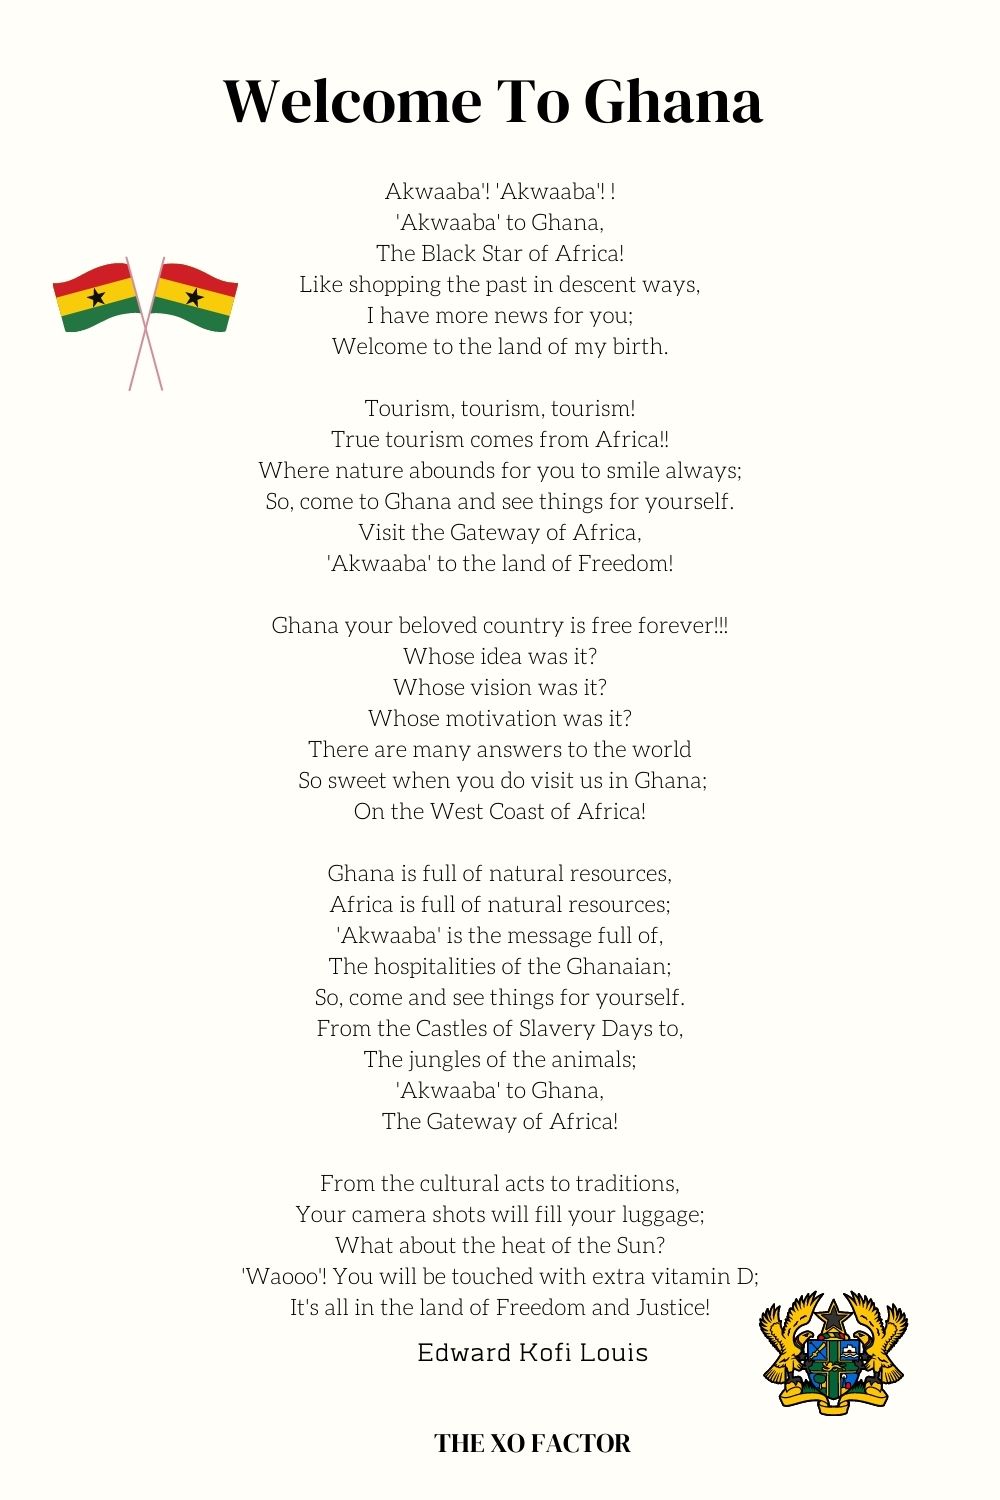 Welcome To Ghana by Edward Kofi Louis Poems about Ghana